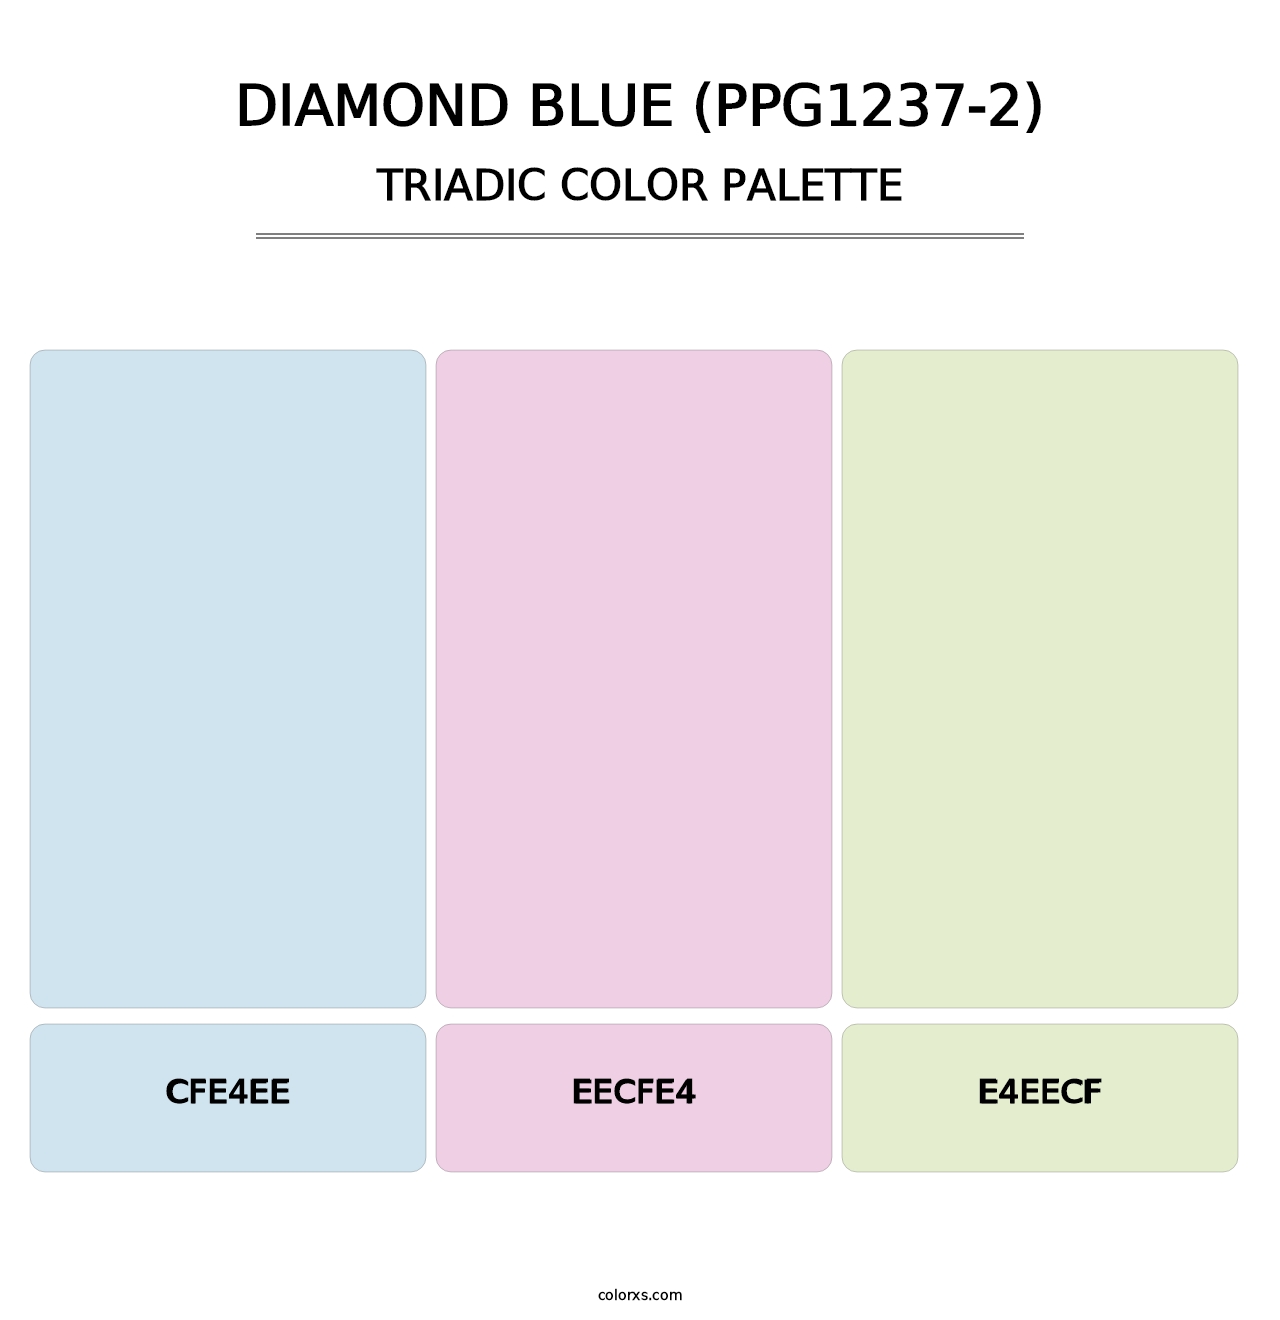 Diamond Blue (PPG1237-2) - Triadic Color Palette